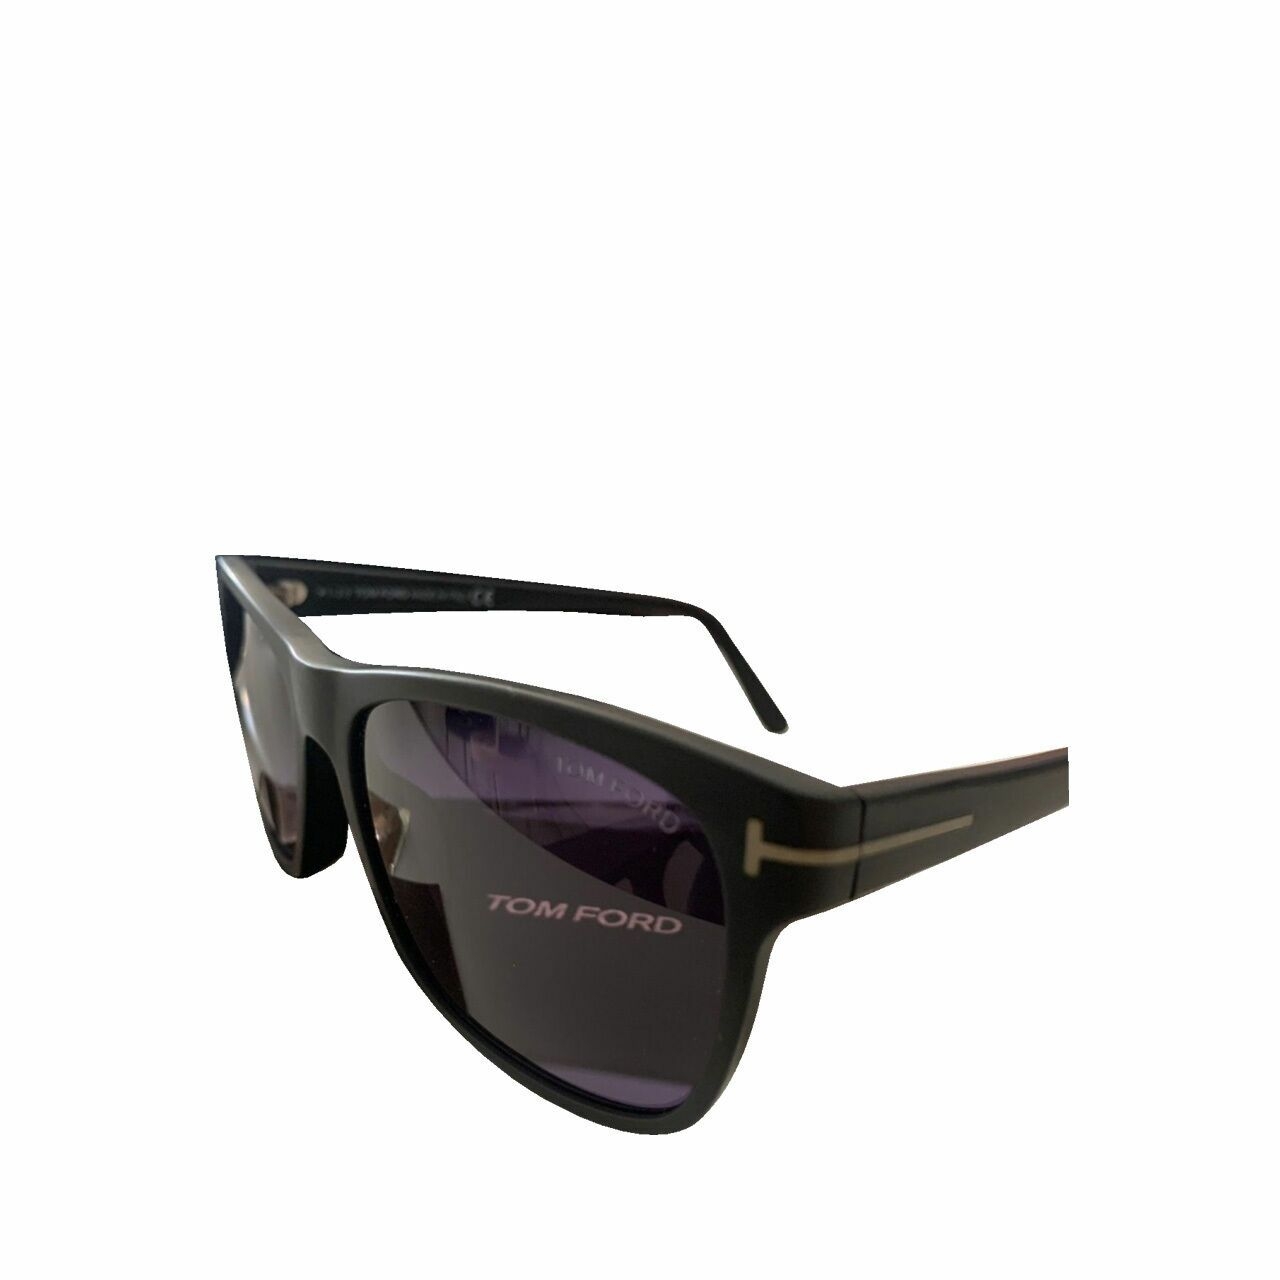 Tom Ford Sunglasses Black 32013 Longarone Unisex 